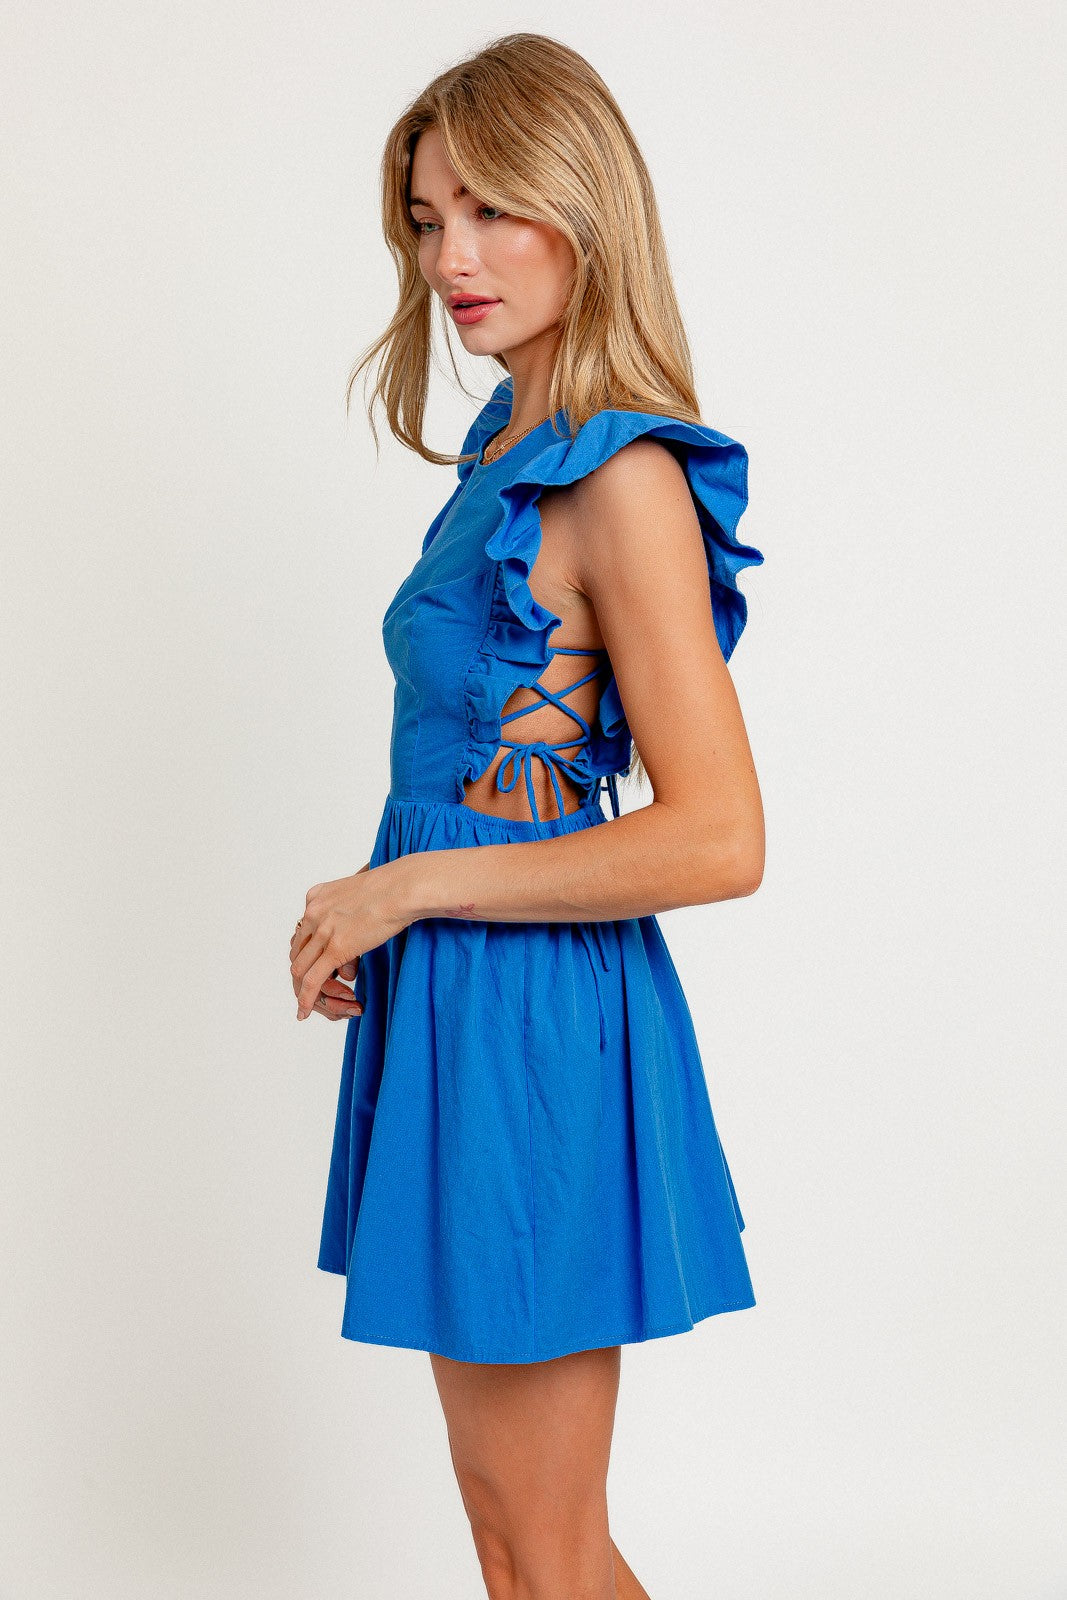 Loris Blue Summer Dress